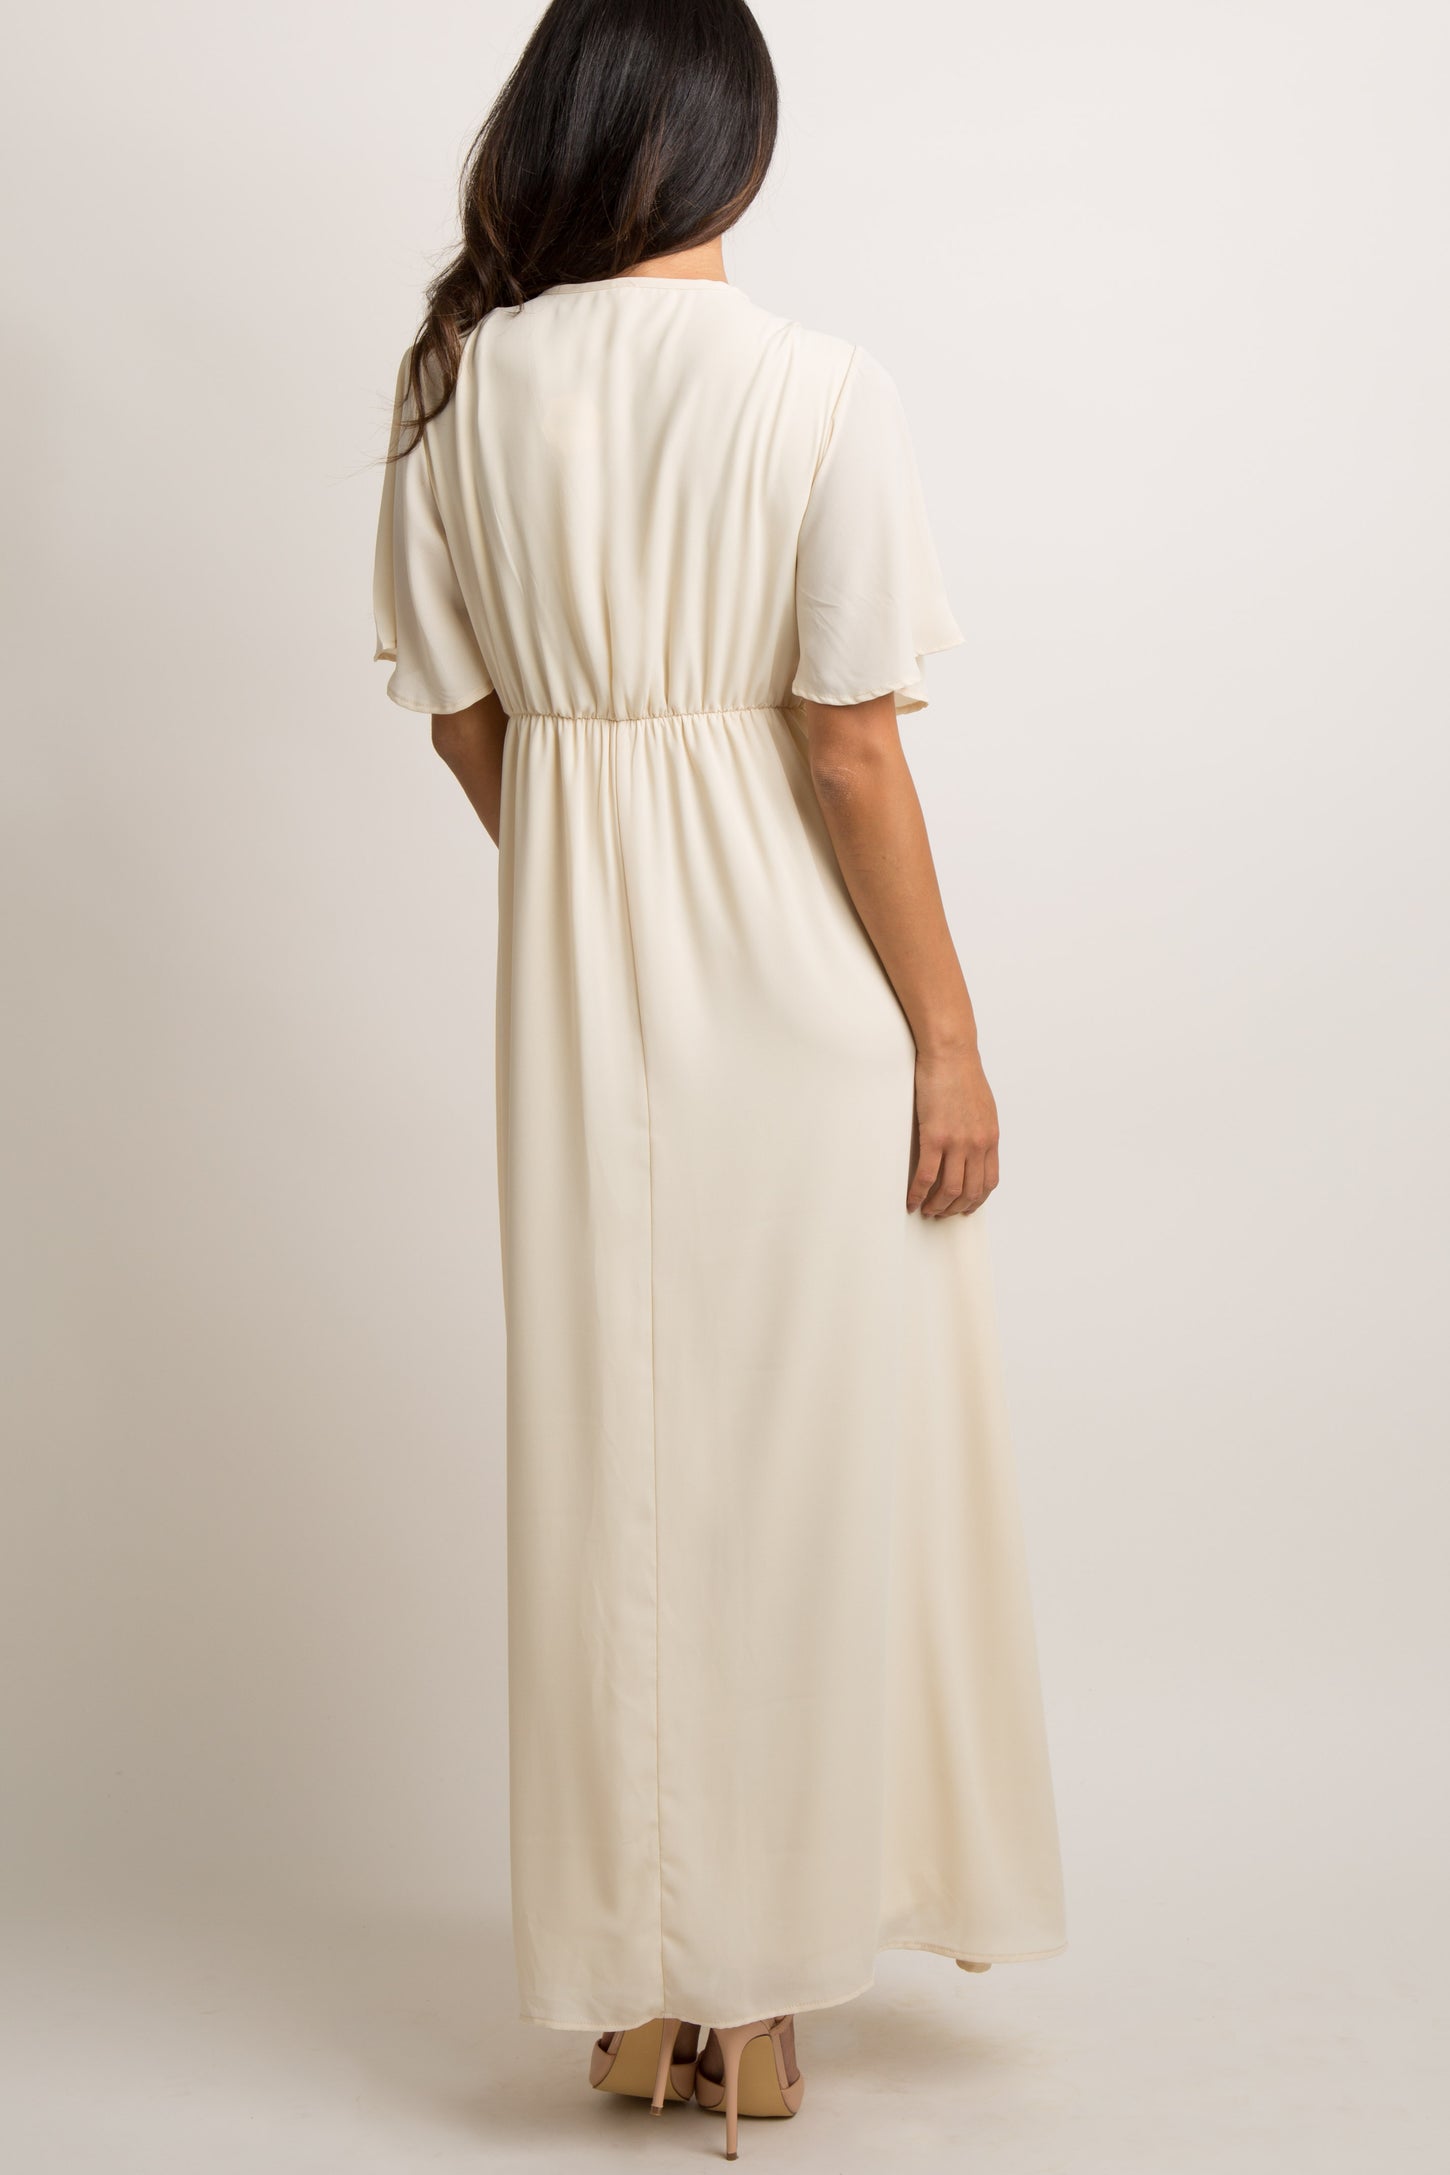 Tall Ivory Chiffon Bell Sleeve Maxi Dress